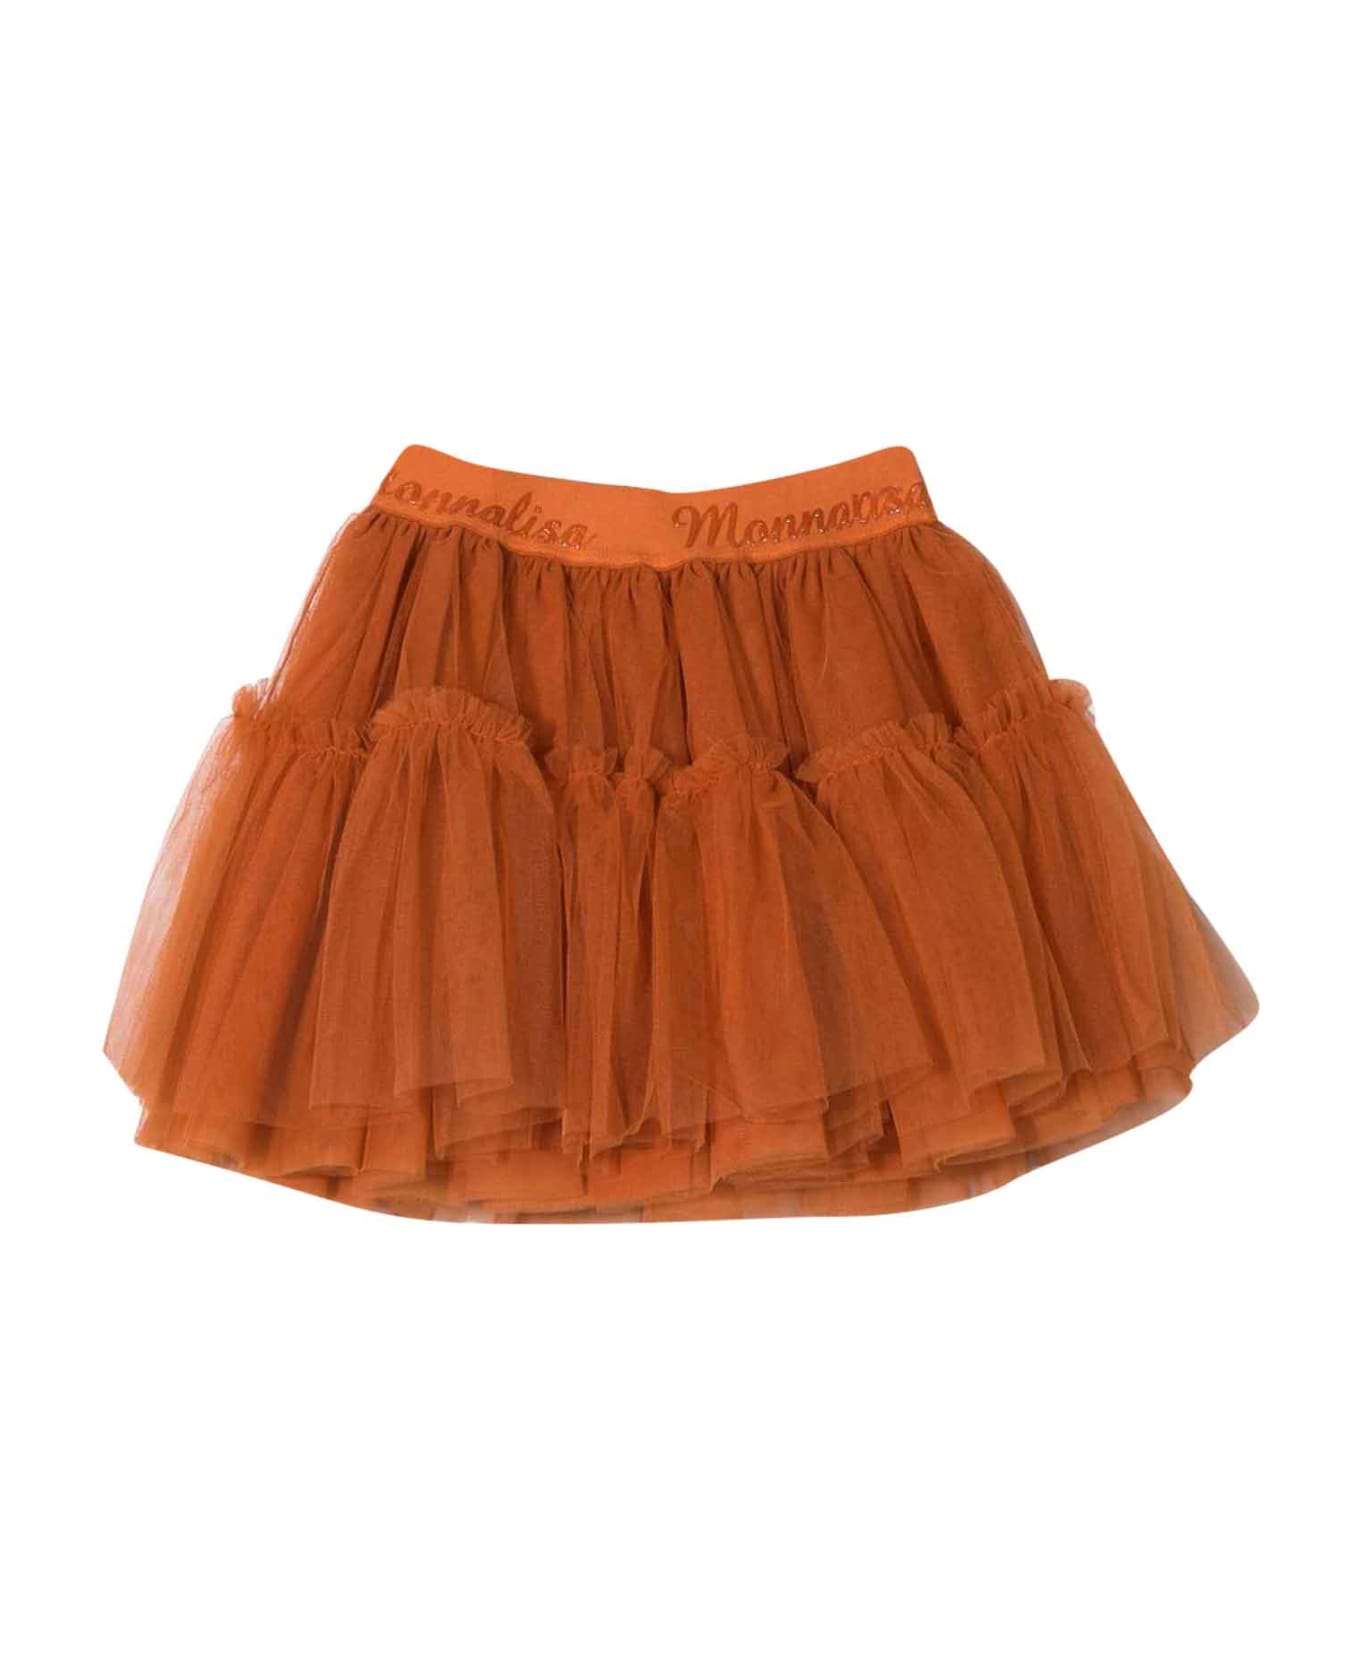 Monnalisa Orange Skirt Girl - ORANGE